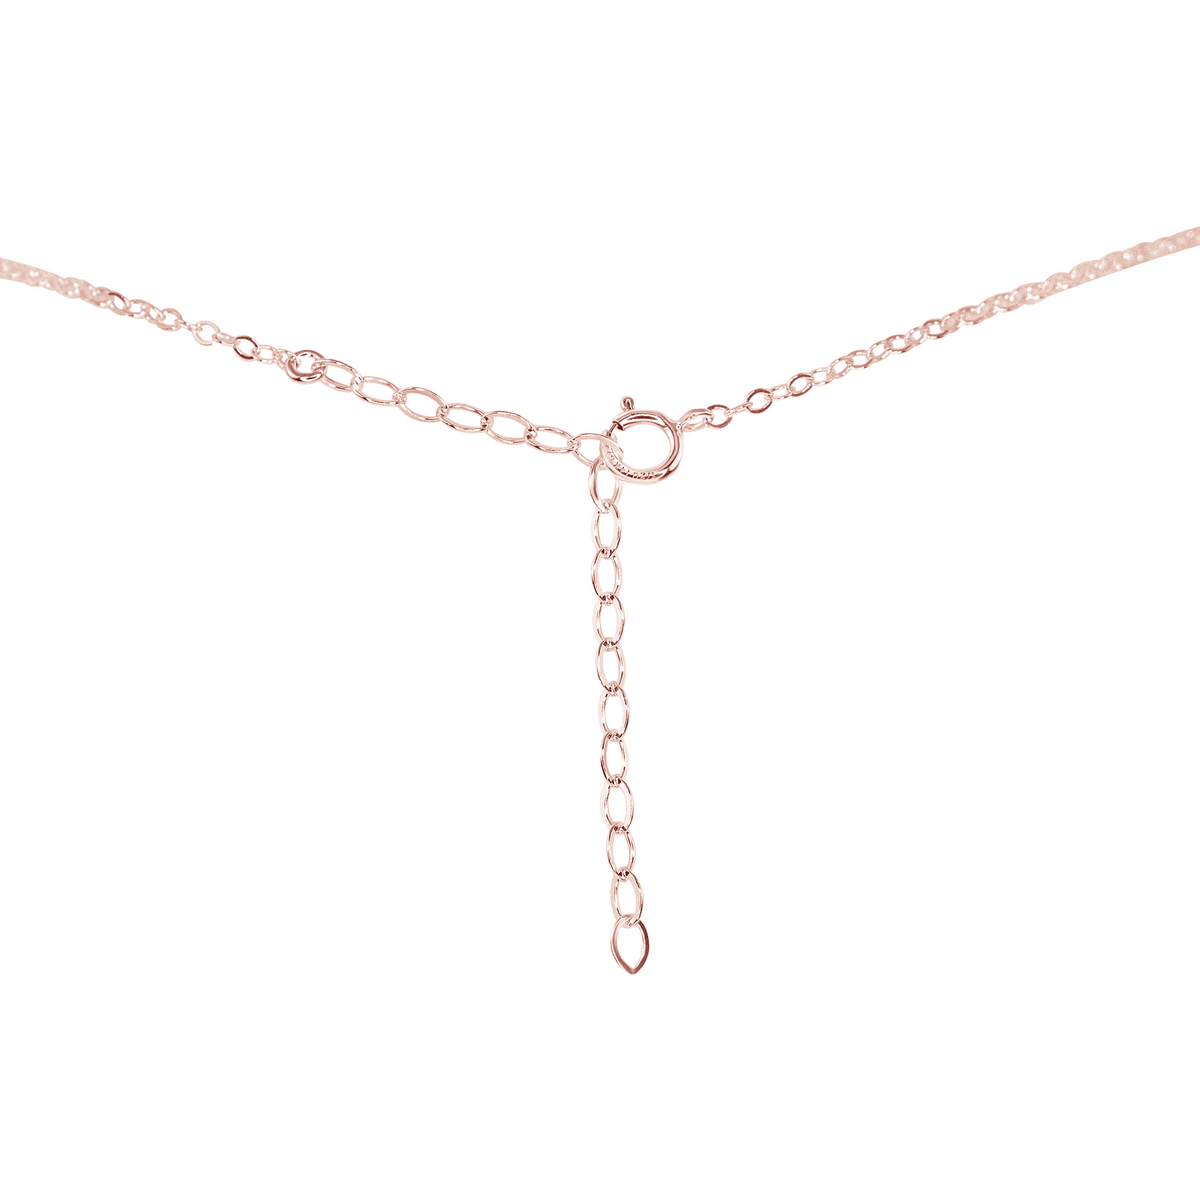 White Moonstone Beaded Chain Choker Necklace - White Moonstone Beaded Chain Choker Necklace - 14k Gold Fill - Luna Tide Handmade Crystal Jewellery